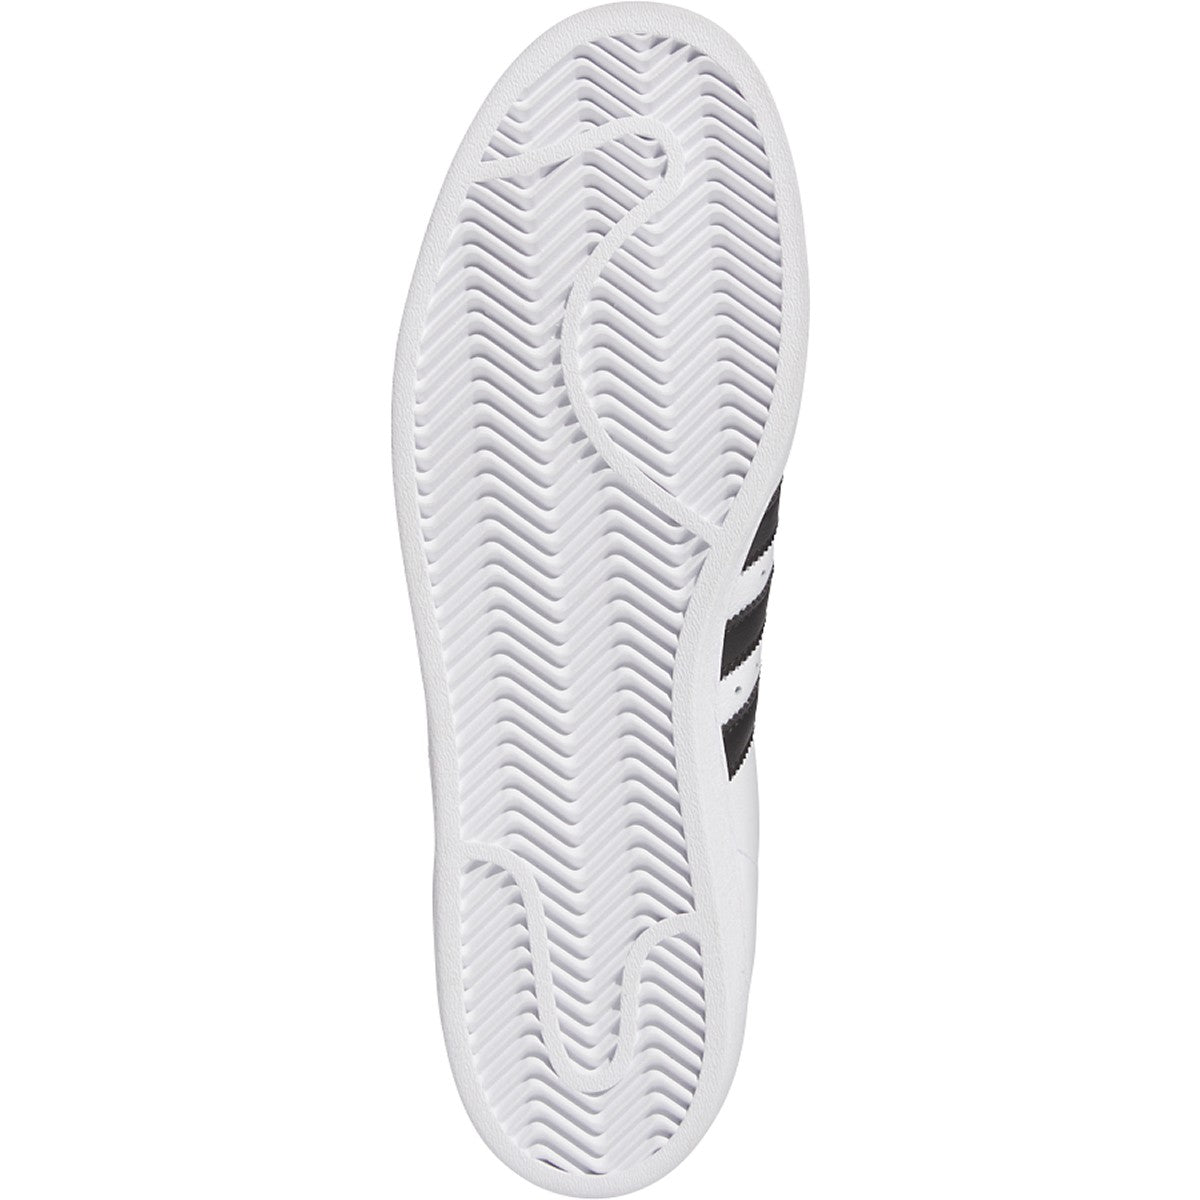 White Pro Model ADV Adidas Skateboarding Shoe Bottom